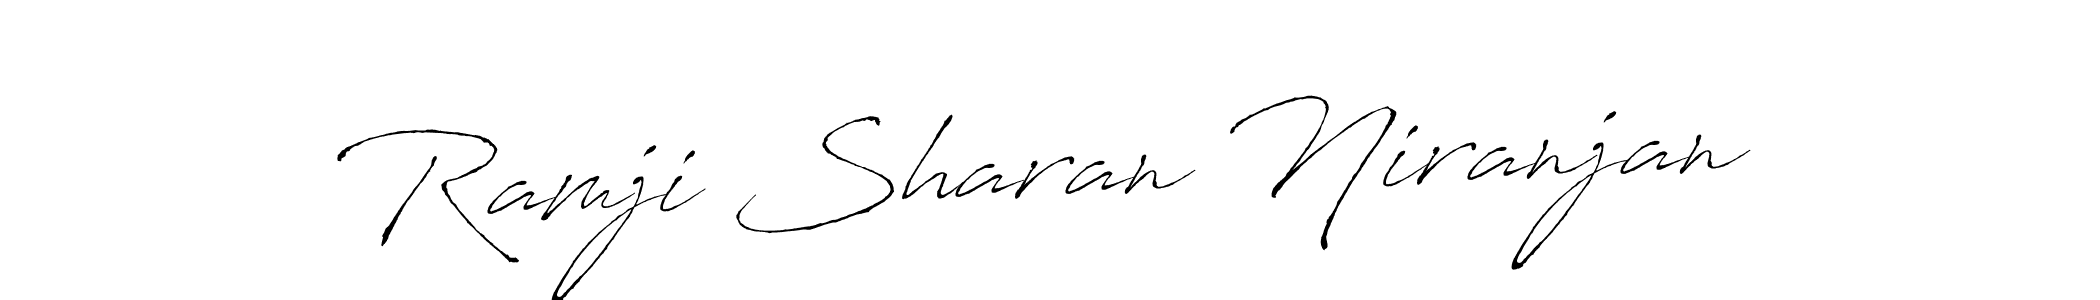 Make a beautiful signature design for name Ramji Sharan Niranjan. Use this online signature maker to create a handwritten signature for free. Ramji Sharan Niranjan signature style 6 images and pictures png